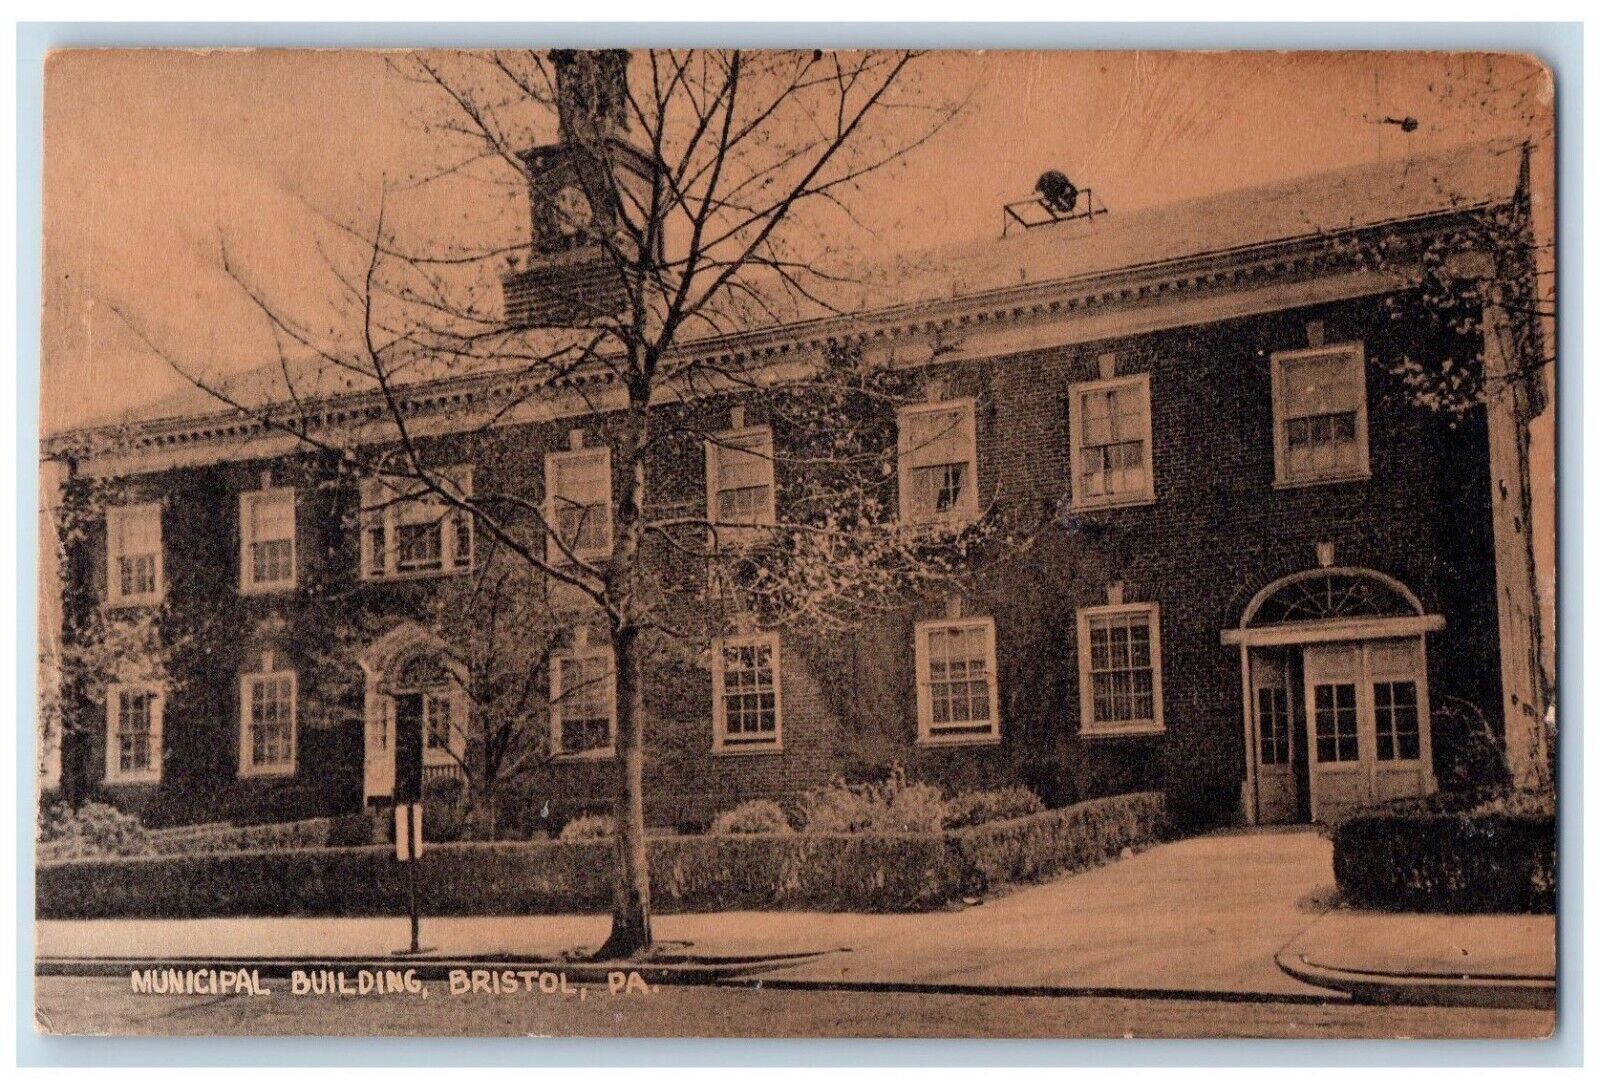 1950 Municipal Building Exterior Bristol Pennsylvania Vintage Antique Postcard